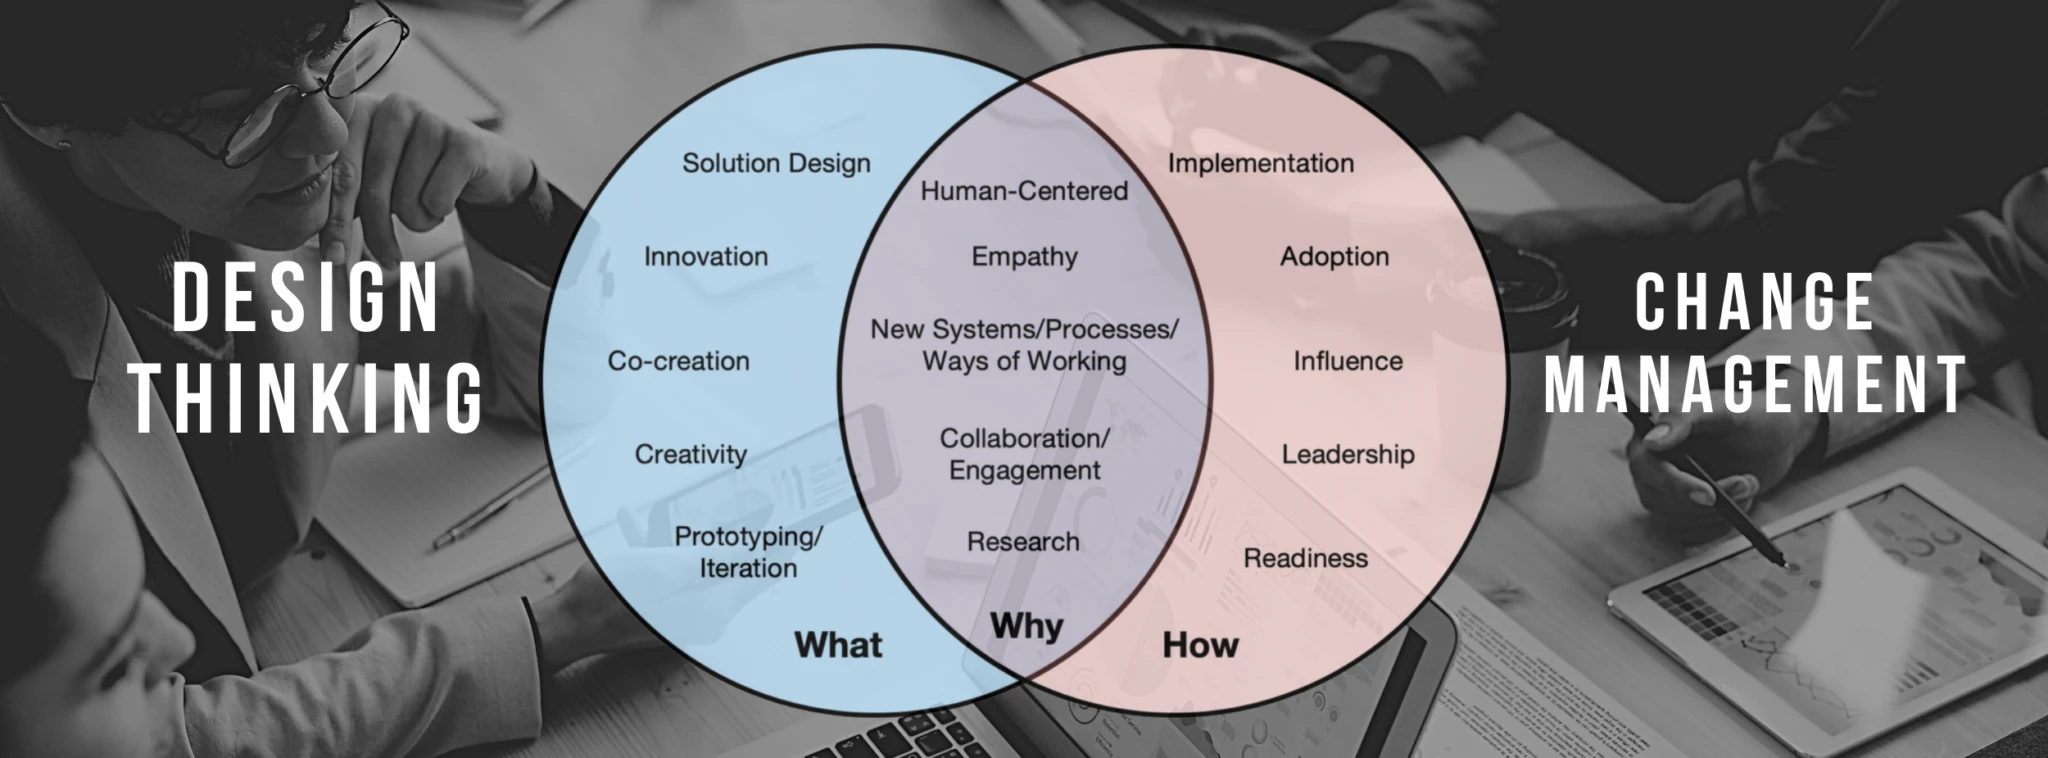 Design Thinking vs Change Management